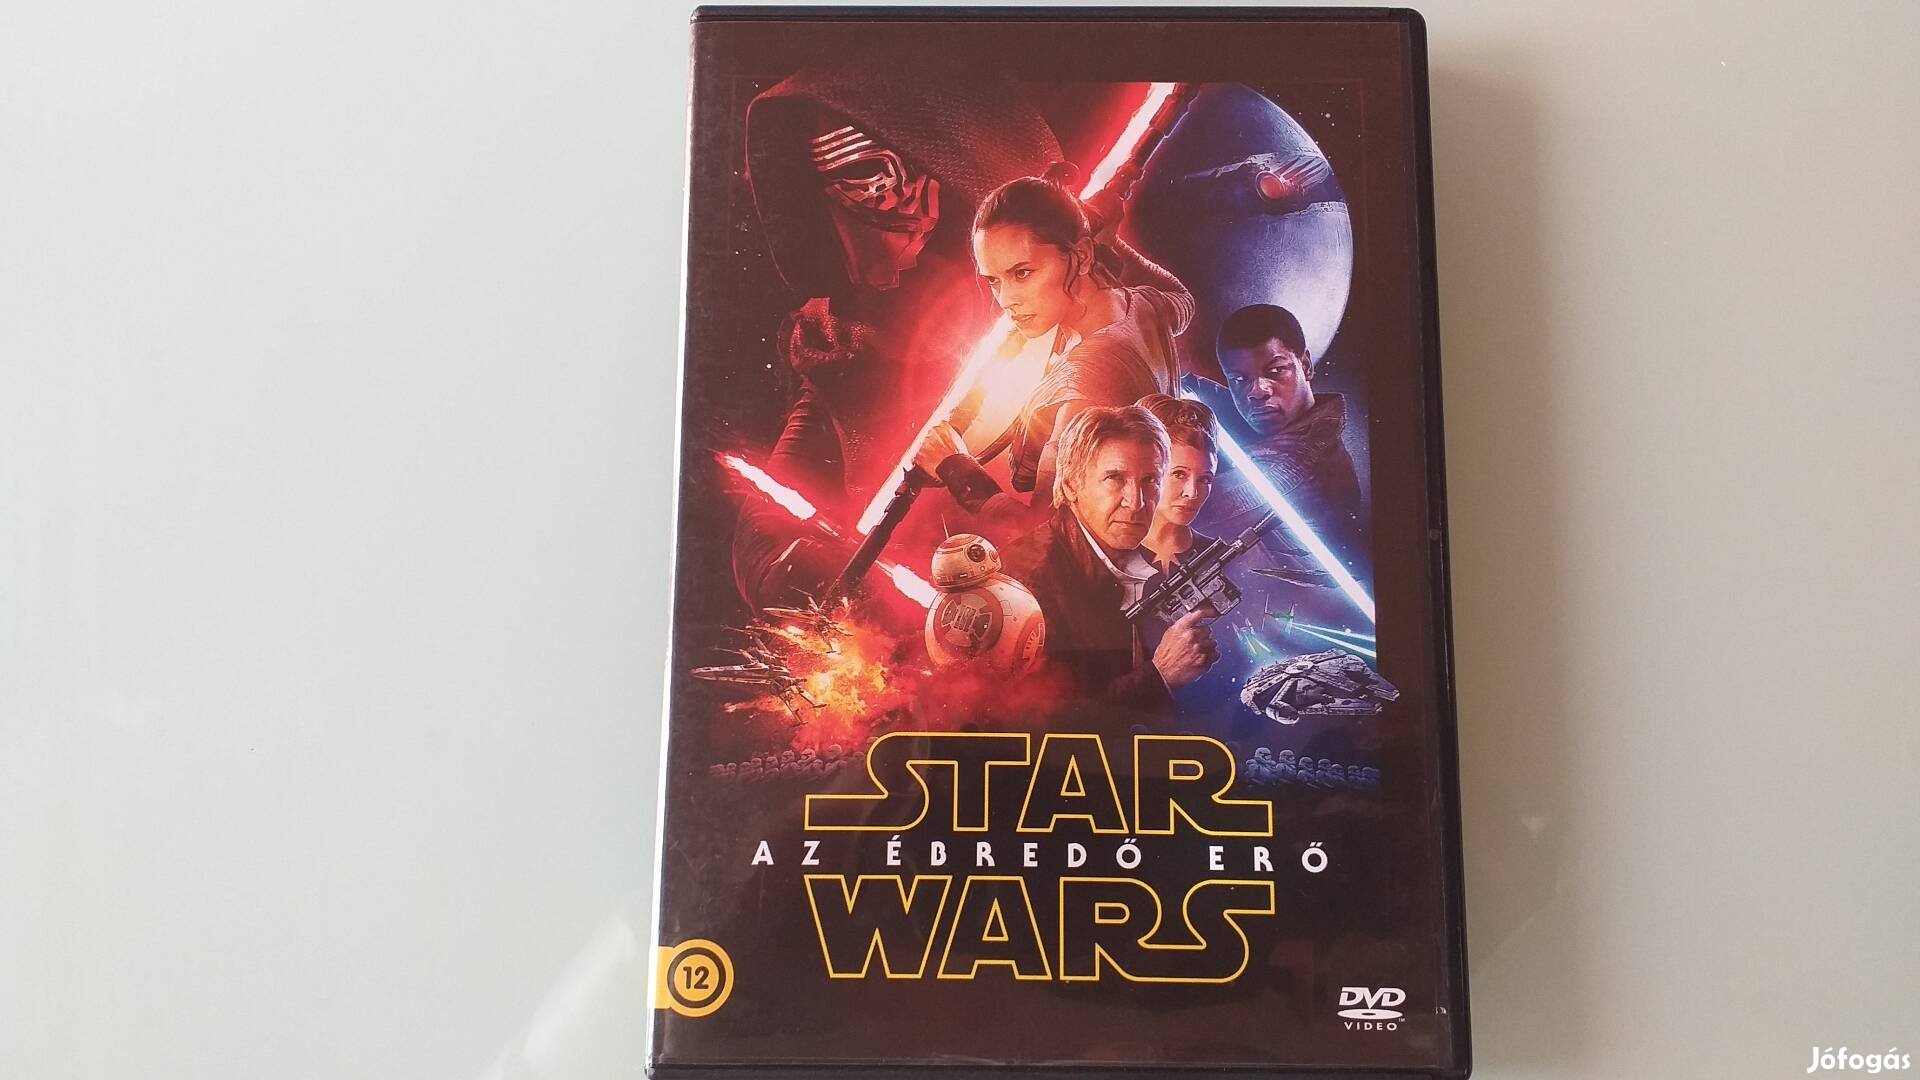 Star Wars ébredő erő DVD film